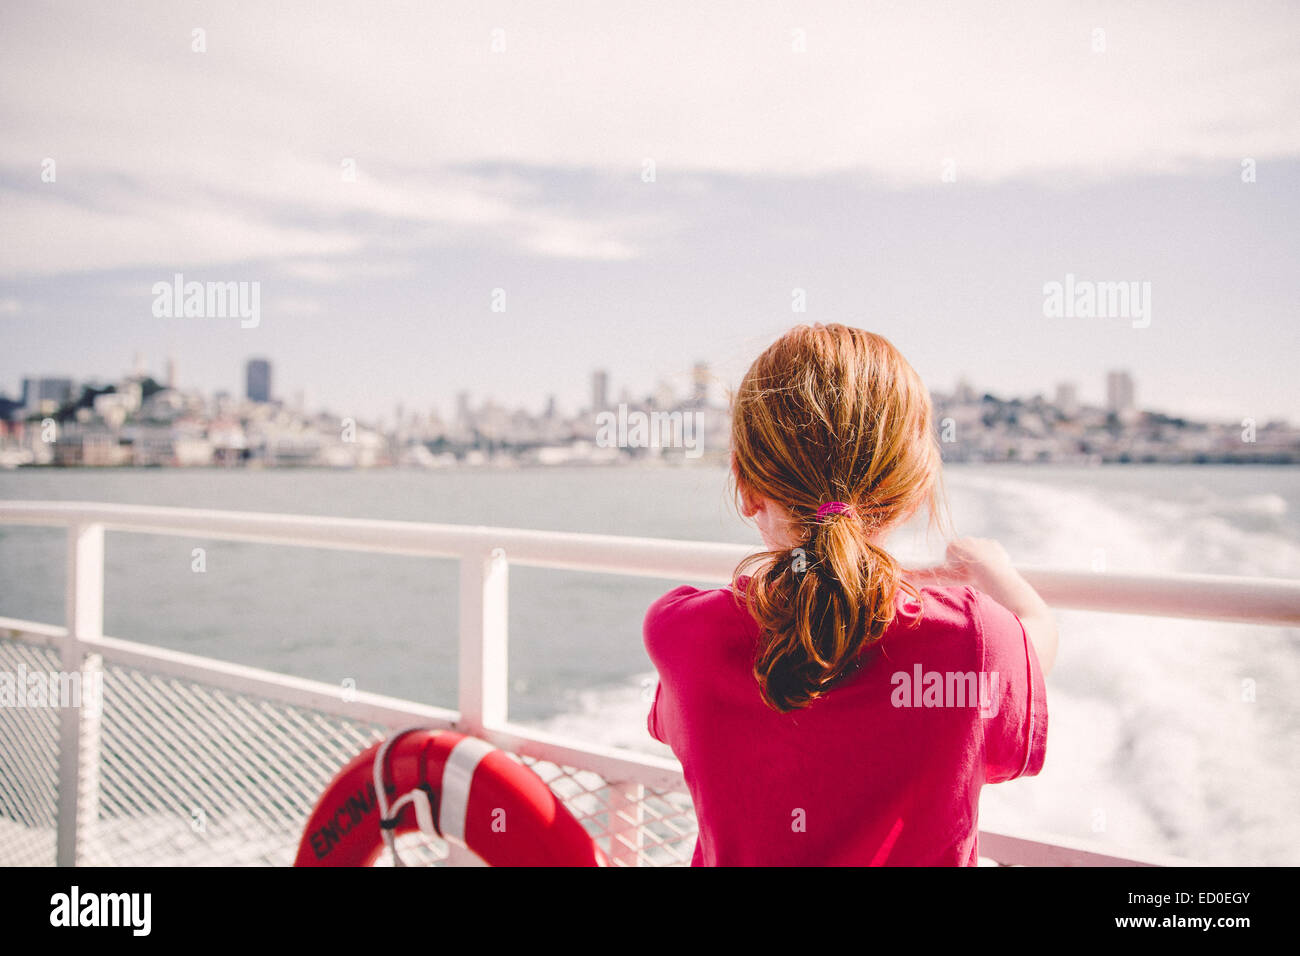 USA, California, San Francisco, Girl (6-7) on ferry looking at city skyline Stock Photo